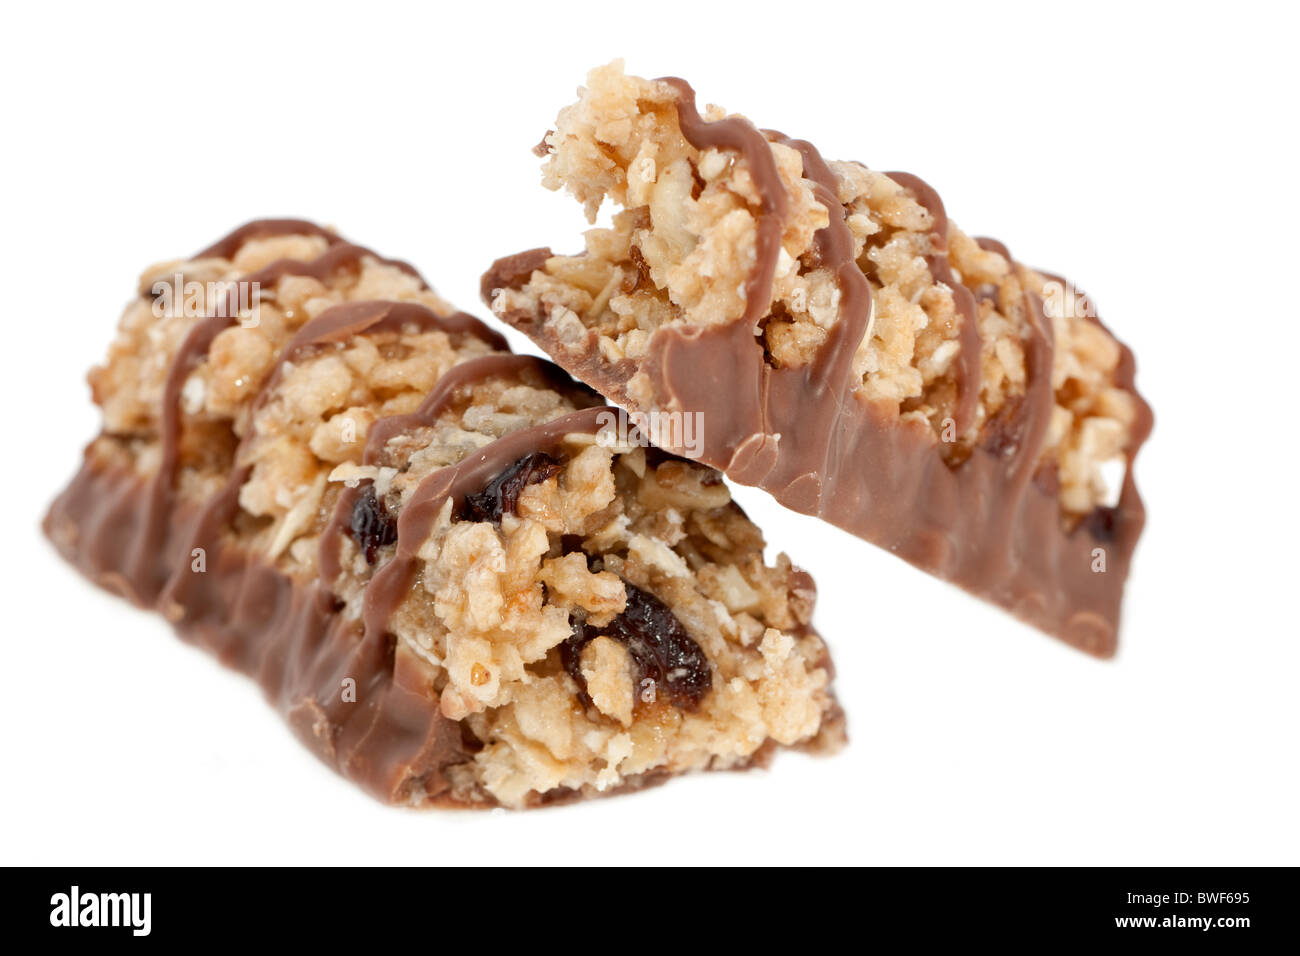 Alpen fruit and nut chocolate bar Stock Photo